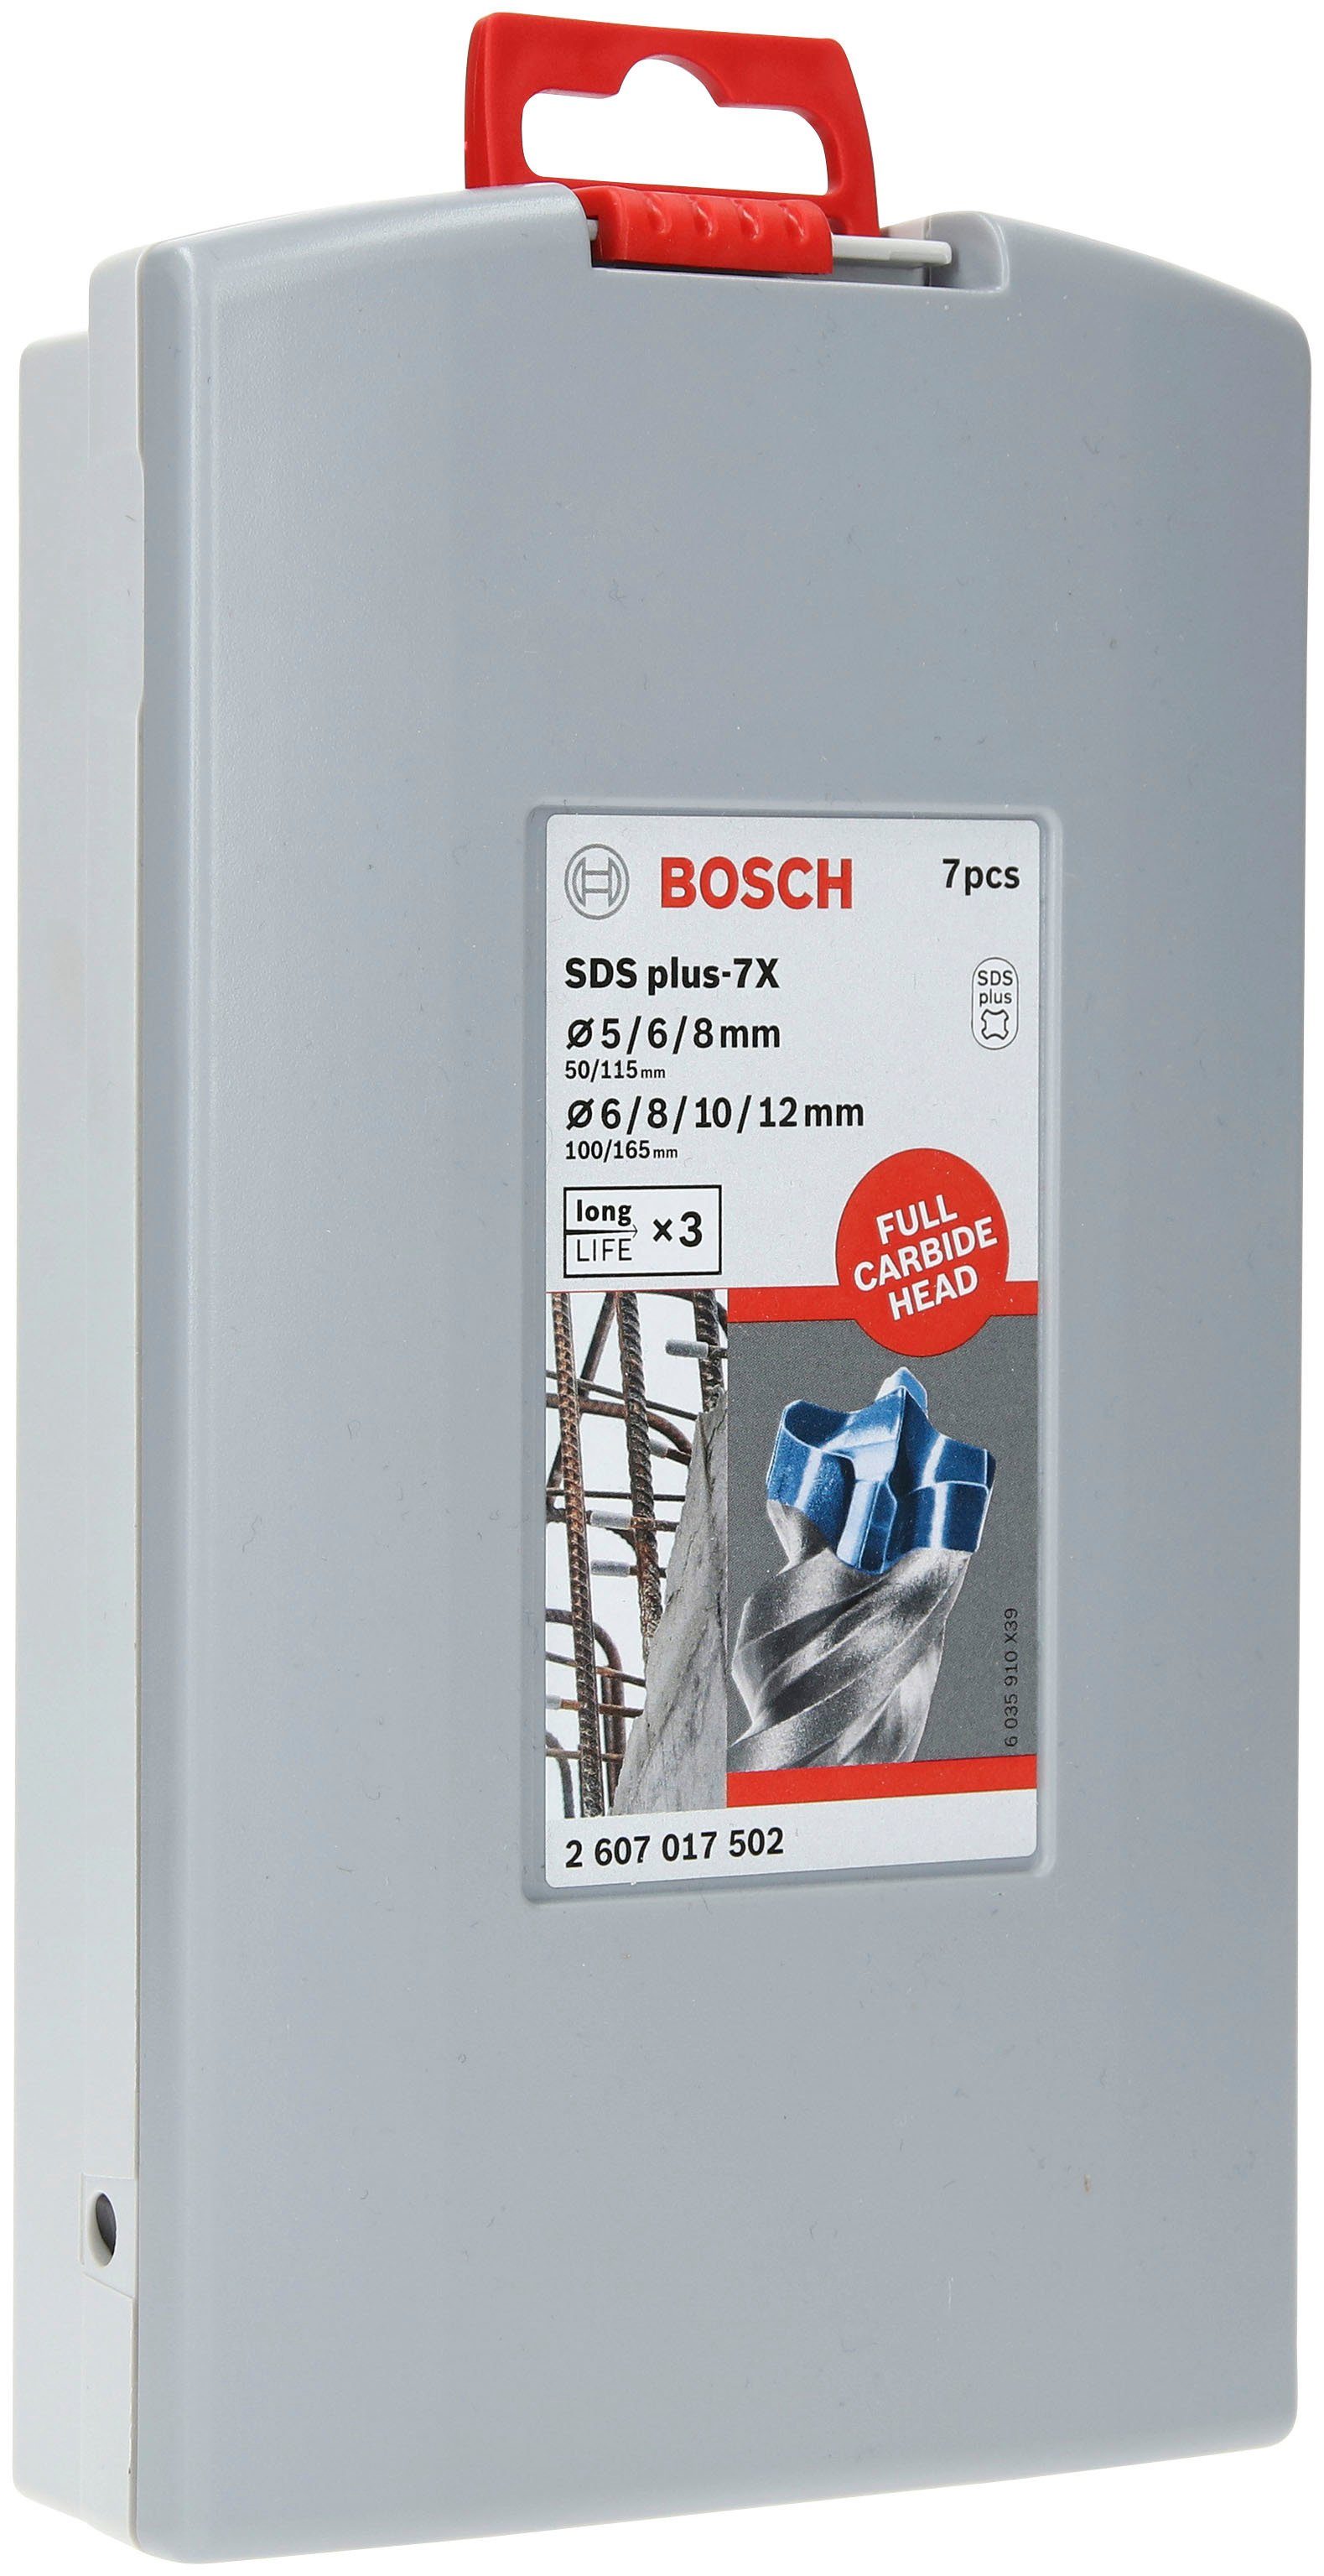 Sch 7tlg. Bitset 4 5/6/6/8/8/10/12mm 7X (2607017502) Professional SDS-plus und Bohrer- Hammerbohrer Bosch